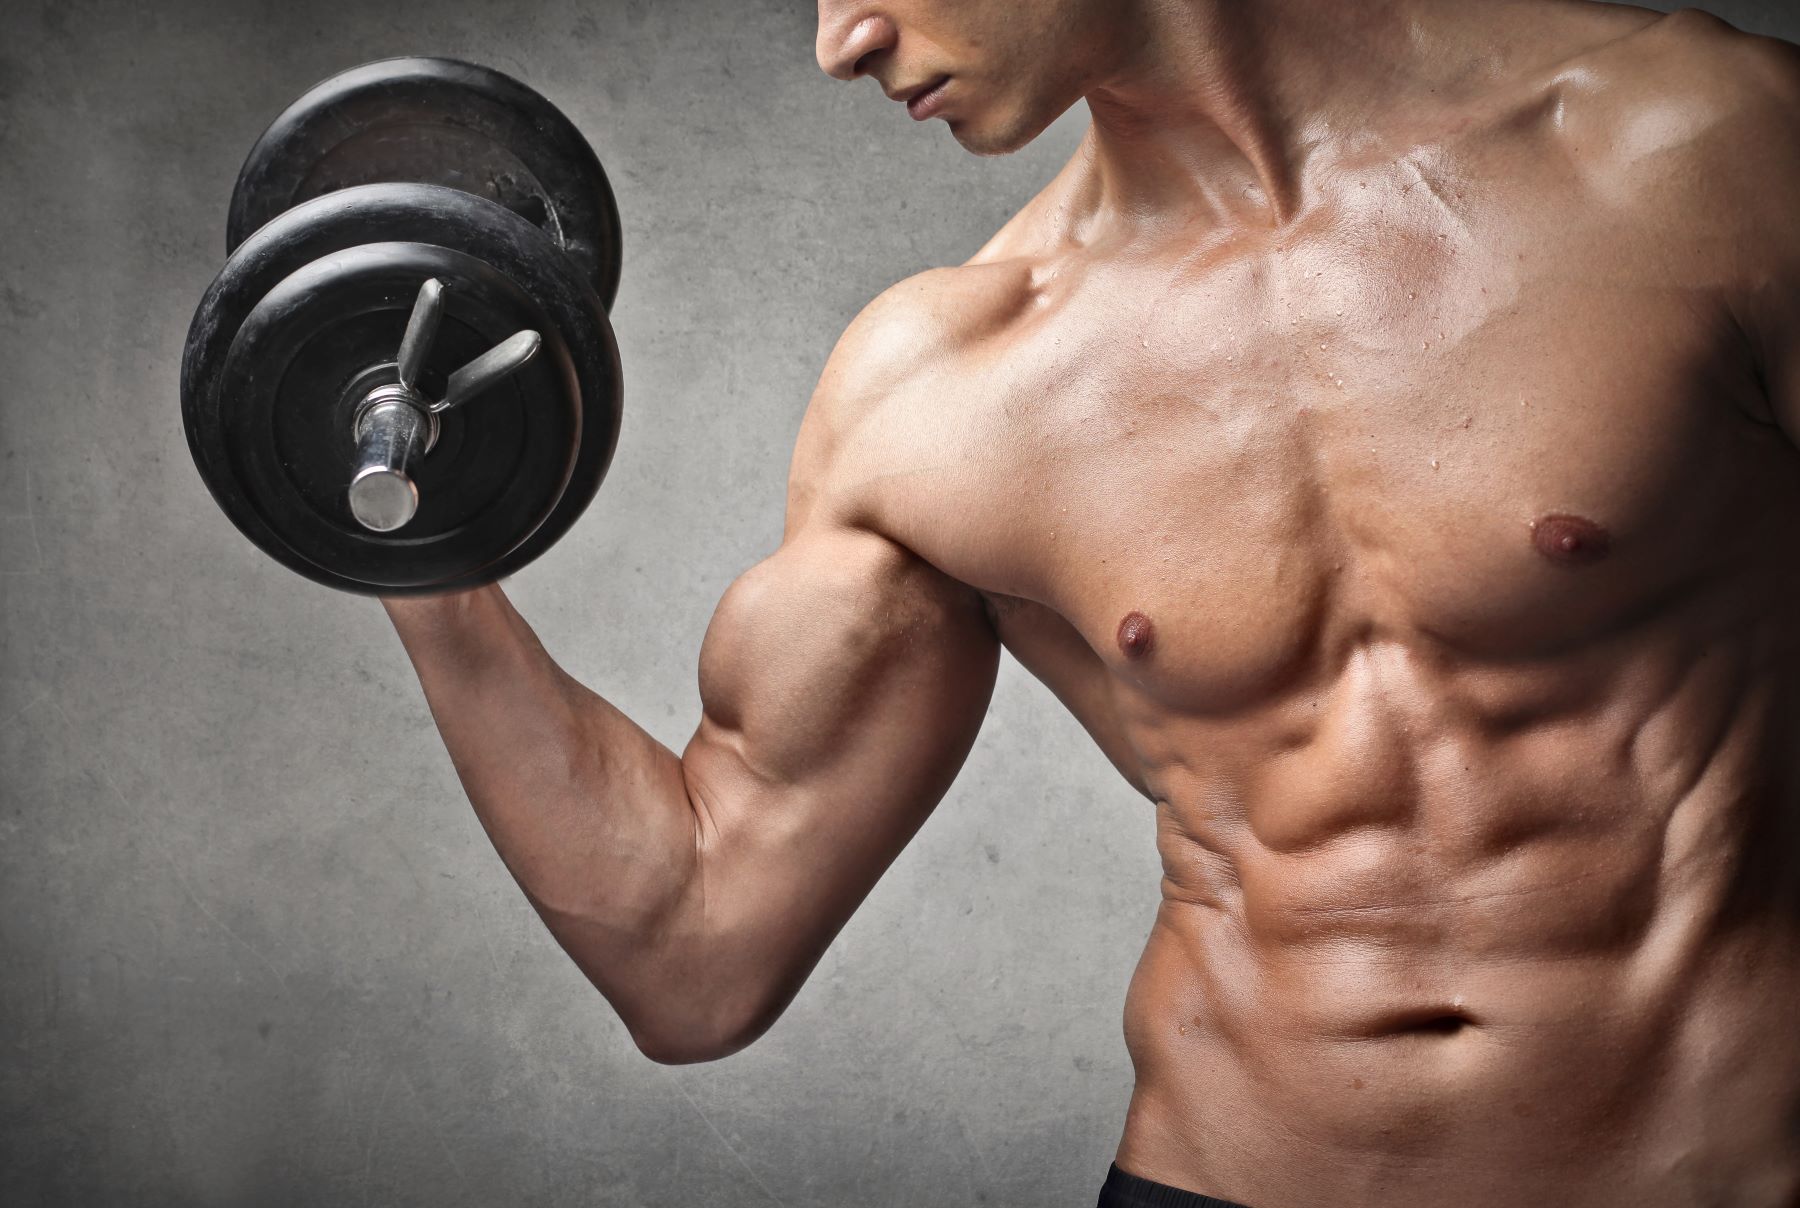 build rock hard muscle mass